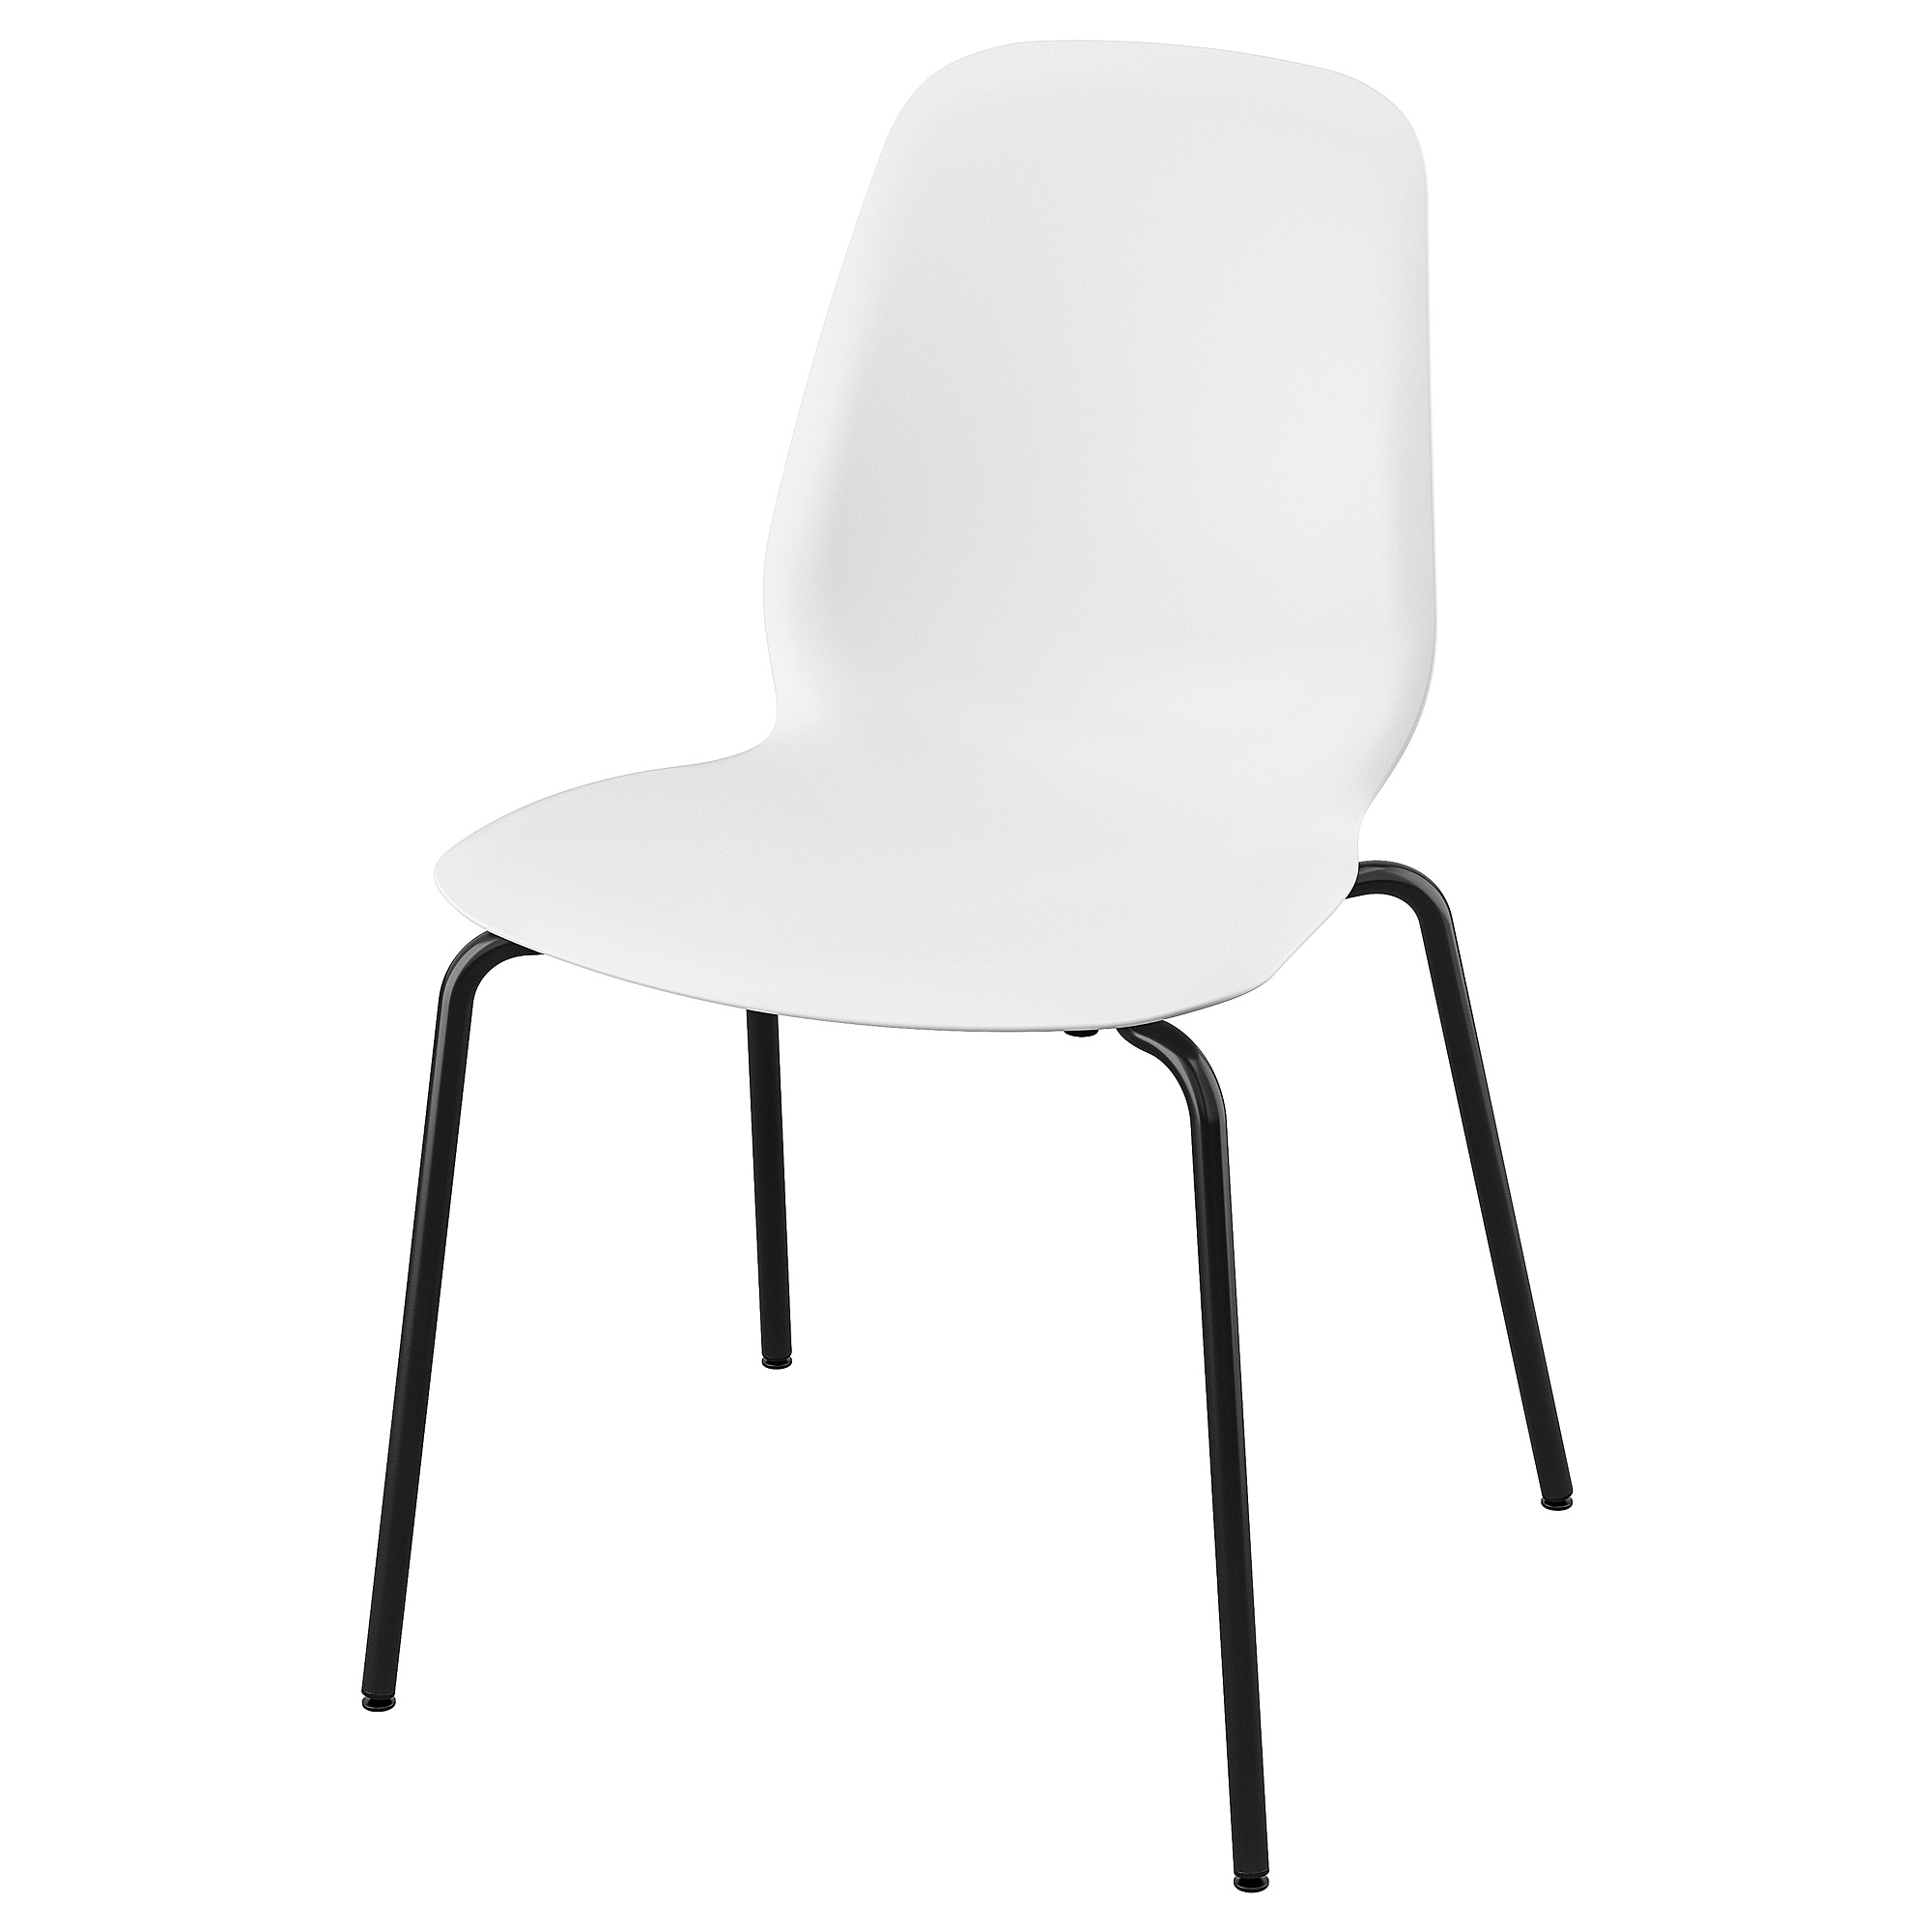 LIDÅS chair